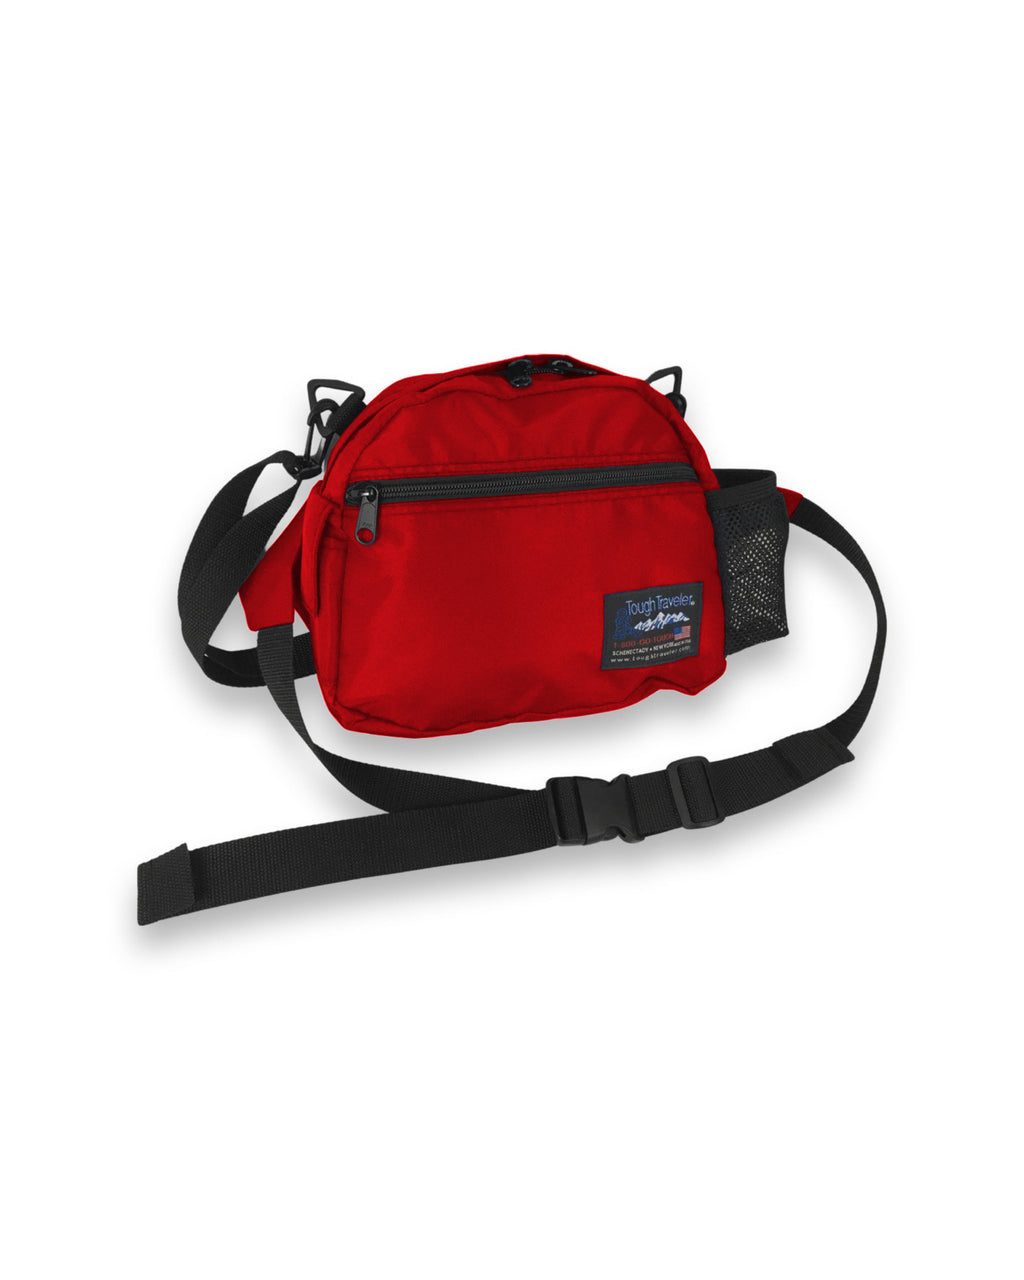 Dome Crossbody Satchel Bag for Women, Lightweight Medium Multi Pockets  Messenger Shoulder Purse (Black) : : Clothing, Shoes & Accessories